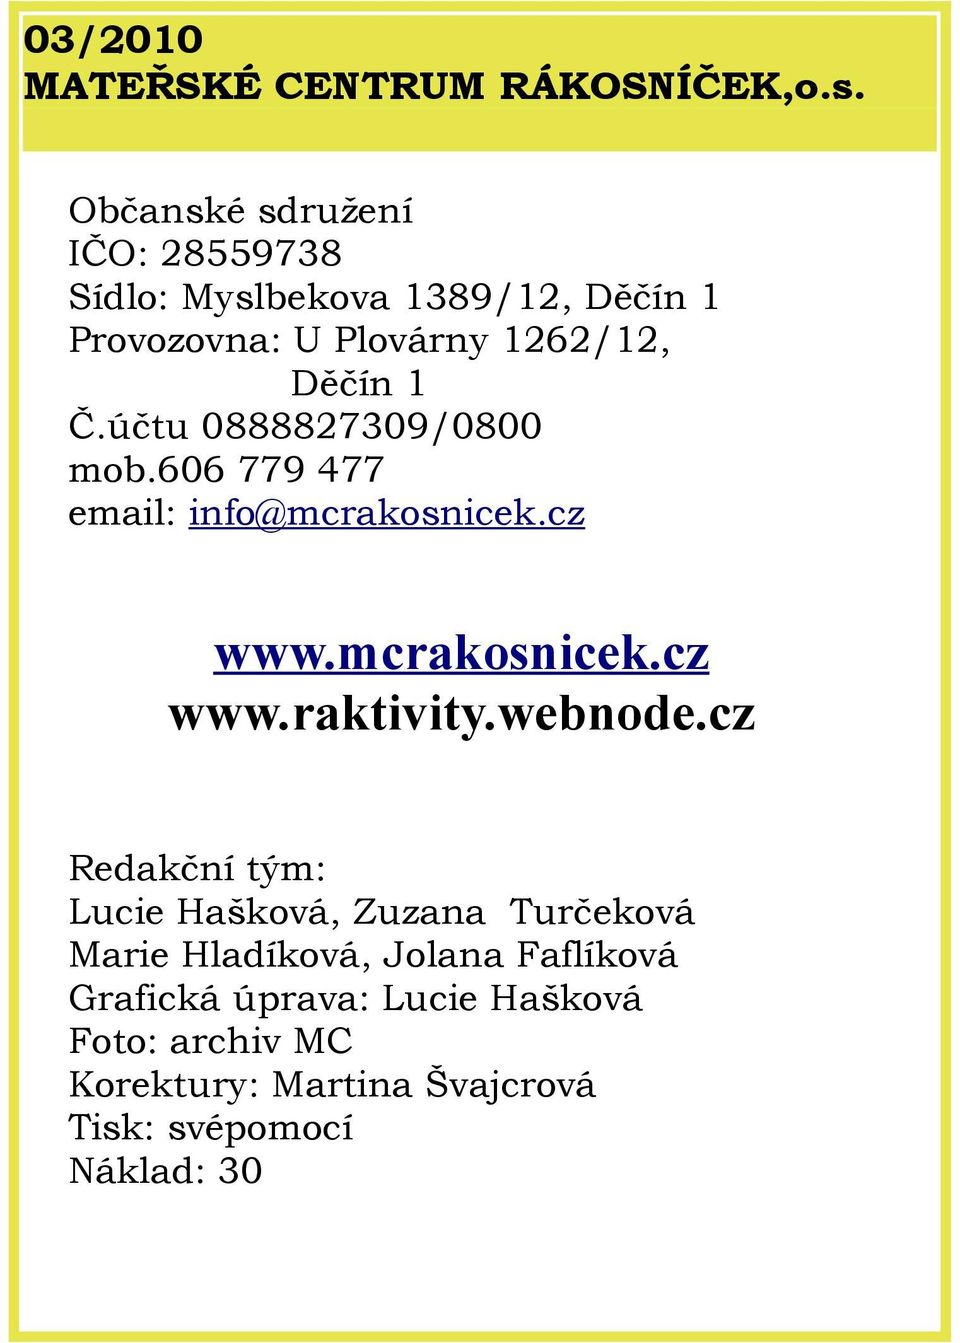 účtu 0888827309/0800 mob.606 779 477 email: info@mcrakosnicek.cz www.mcrakosnicek.cz www.raktivity.webnode.